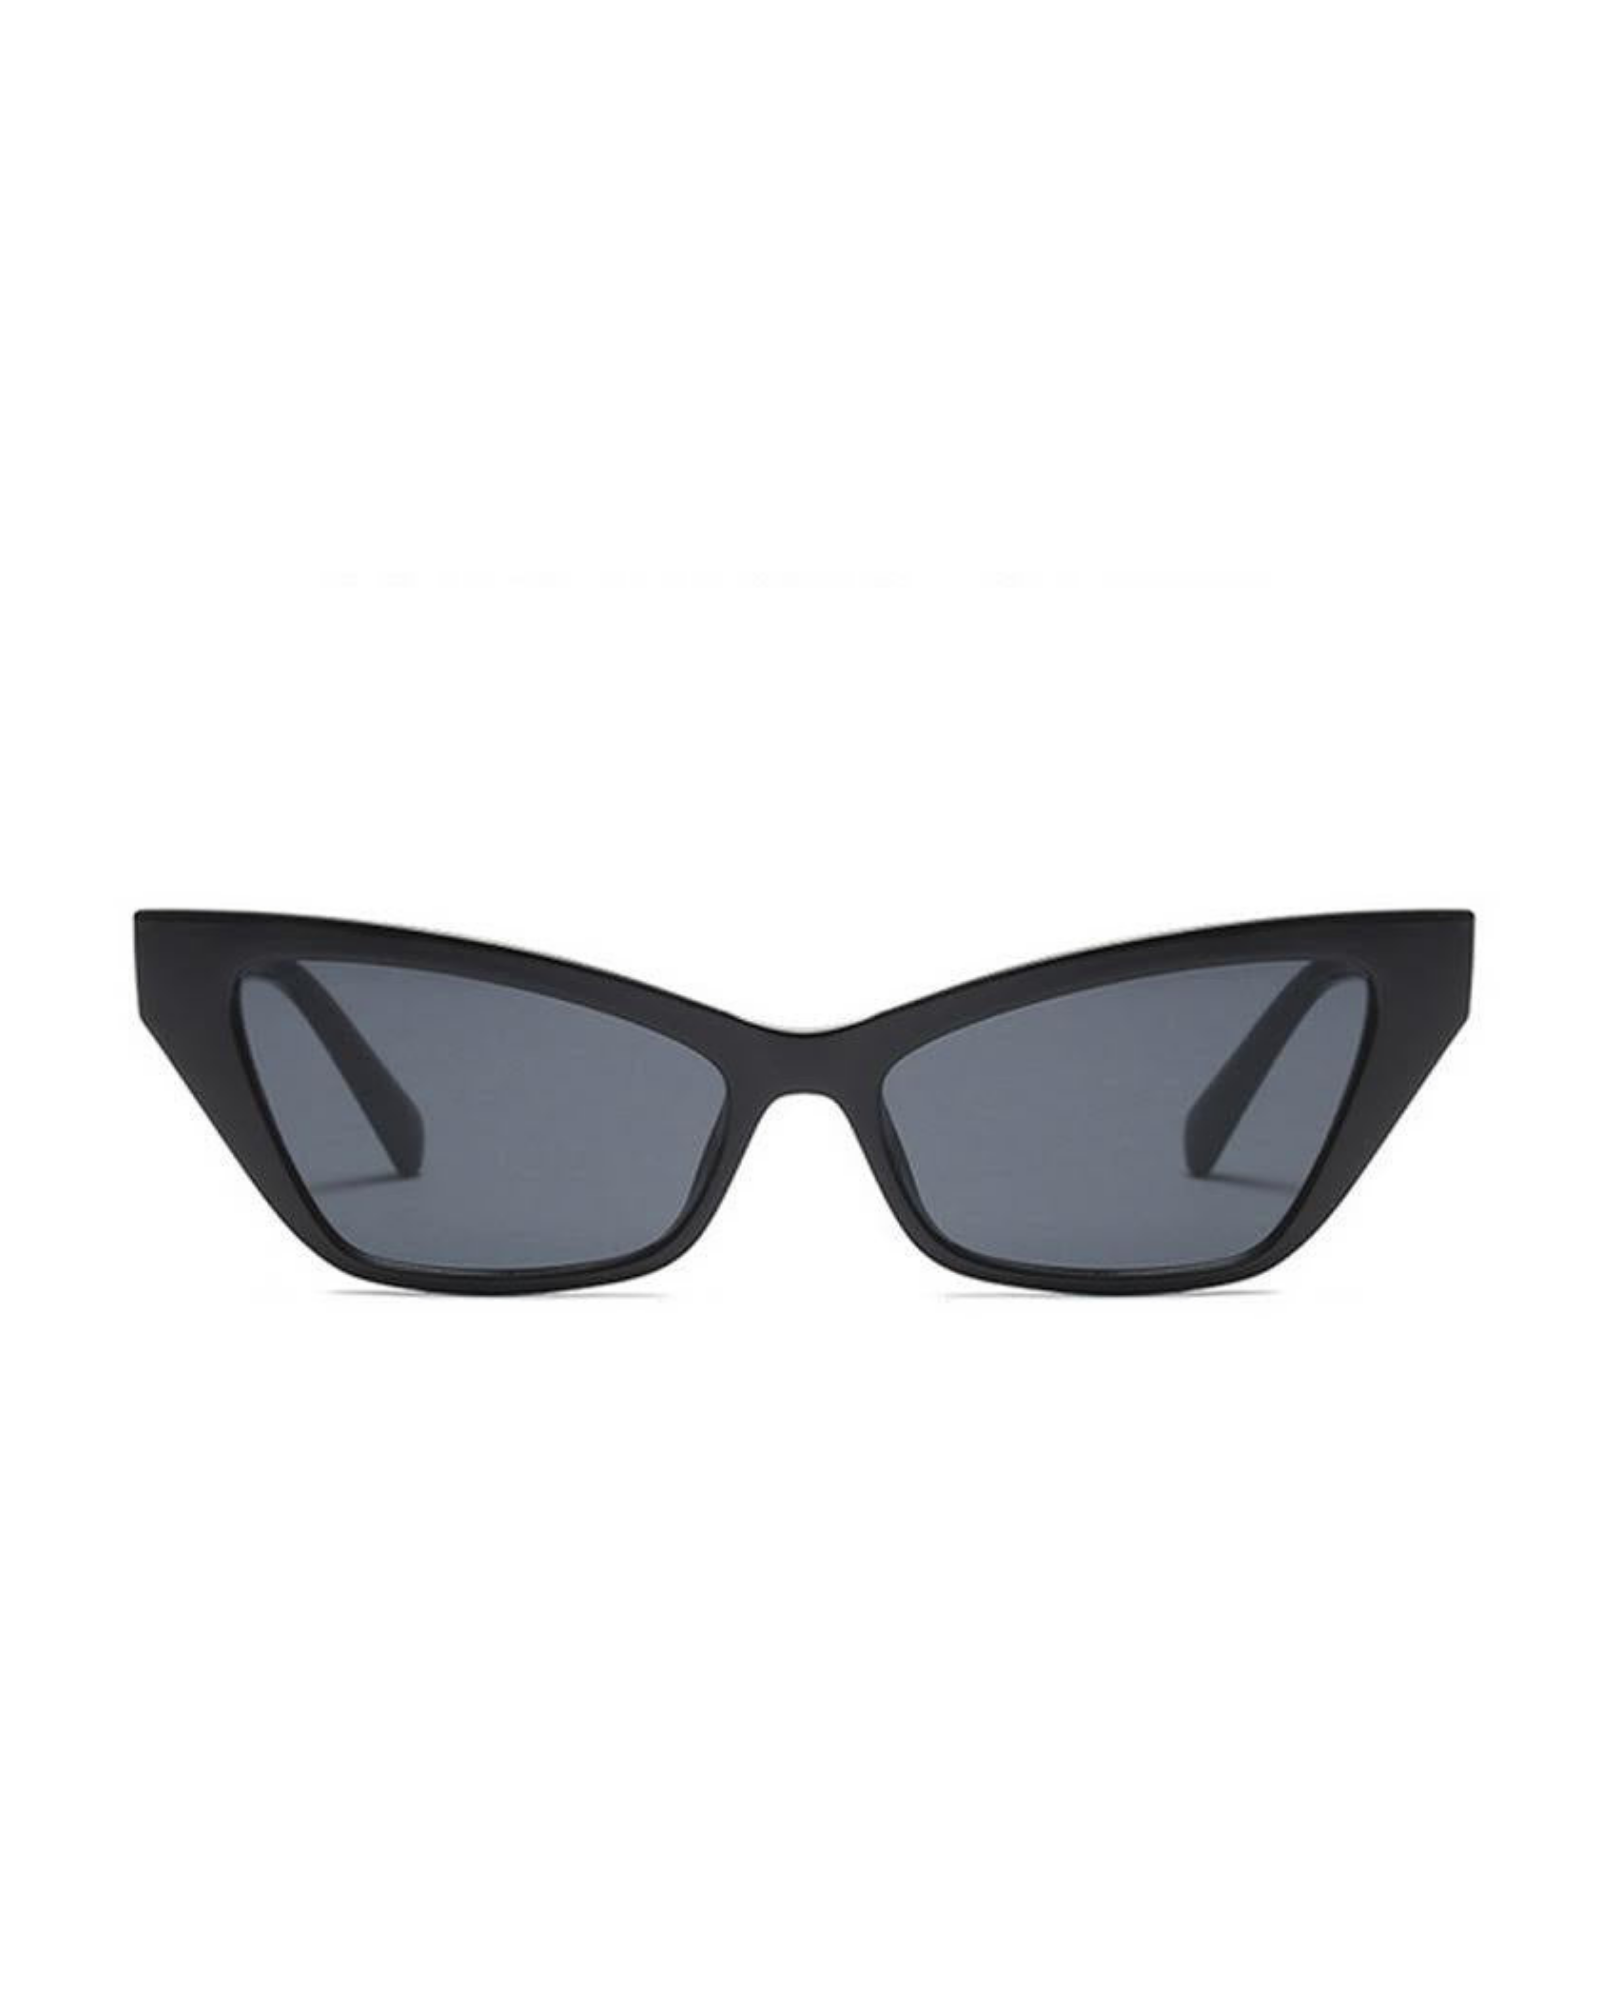 Char Sunglasses In Black - The Details Boutique